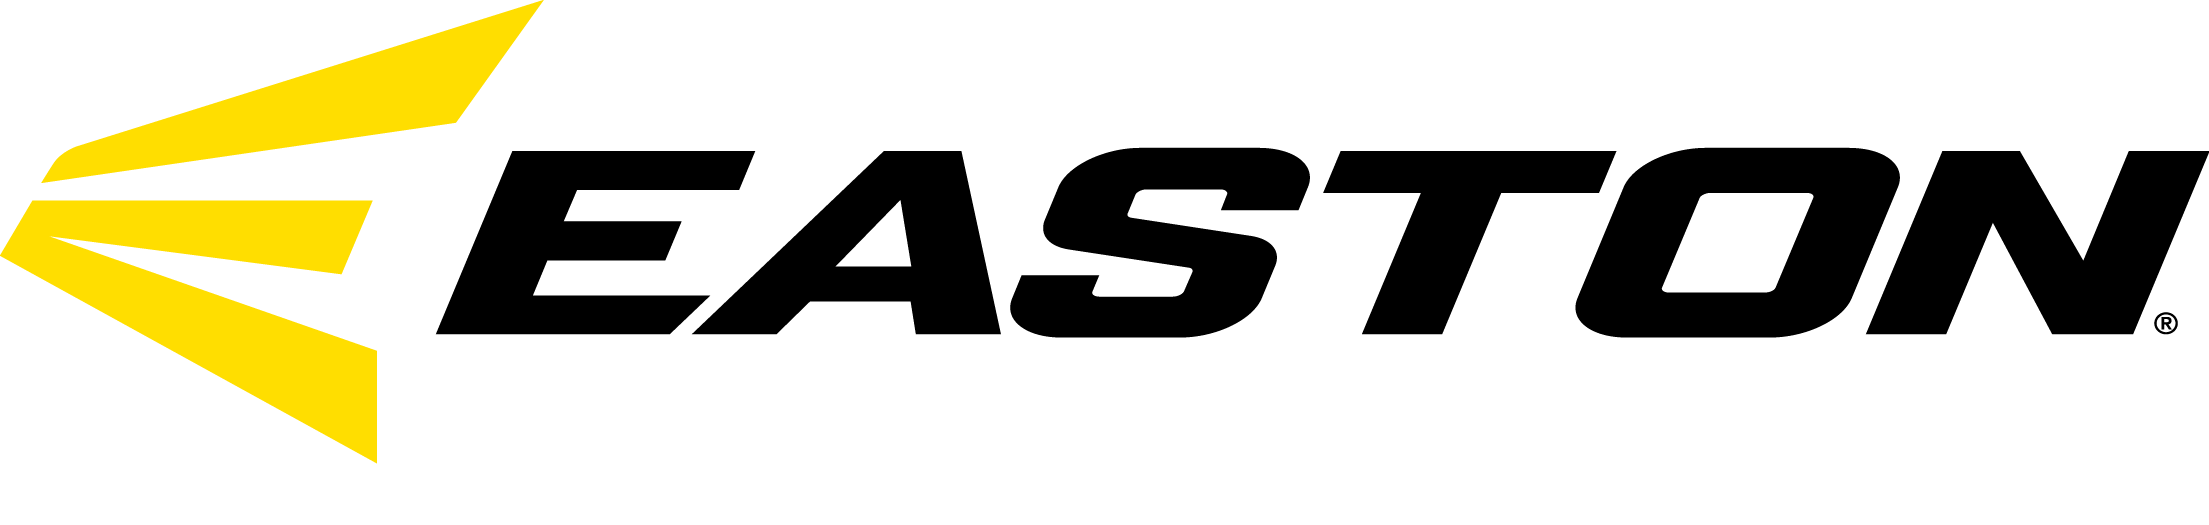 Easton Softball Logo - Team Uniforms | Sporting Goods | Athletic Equipment | Aurora IL